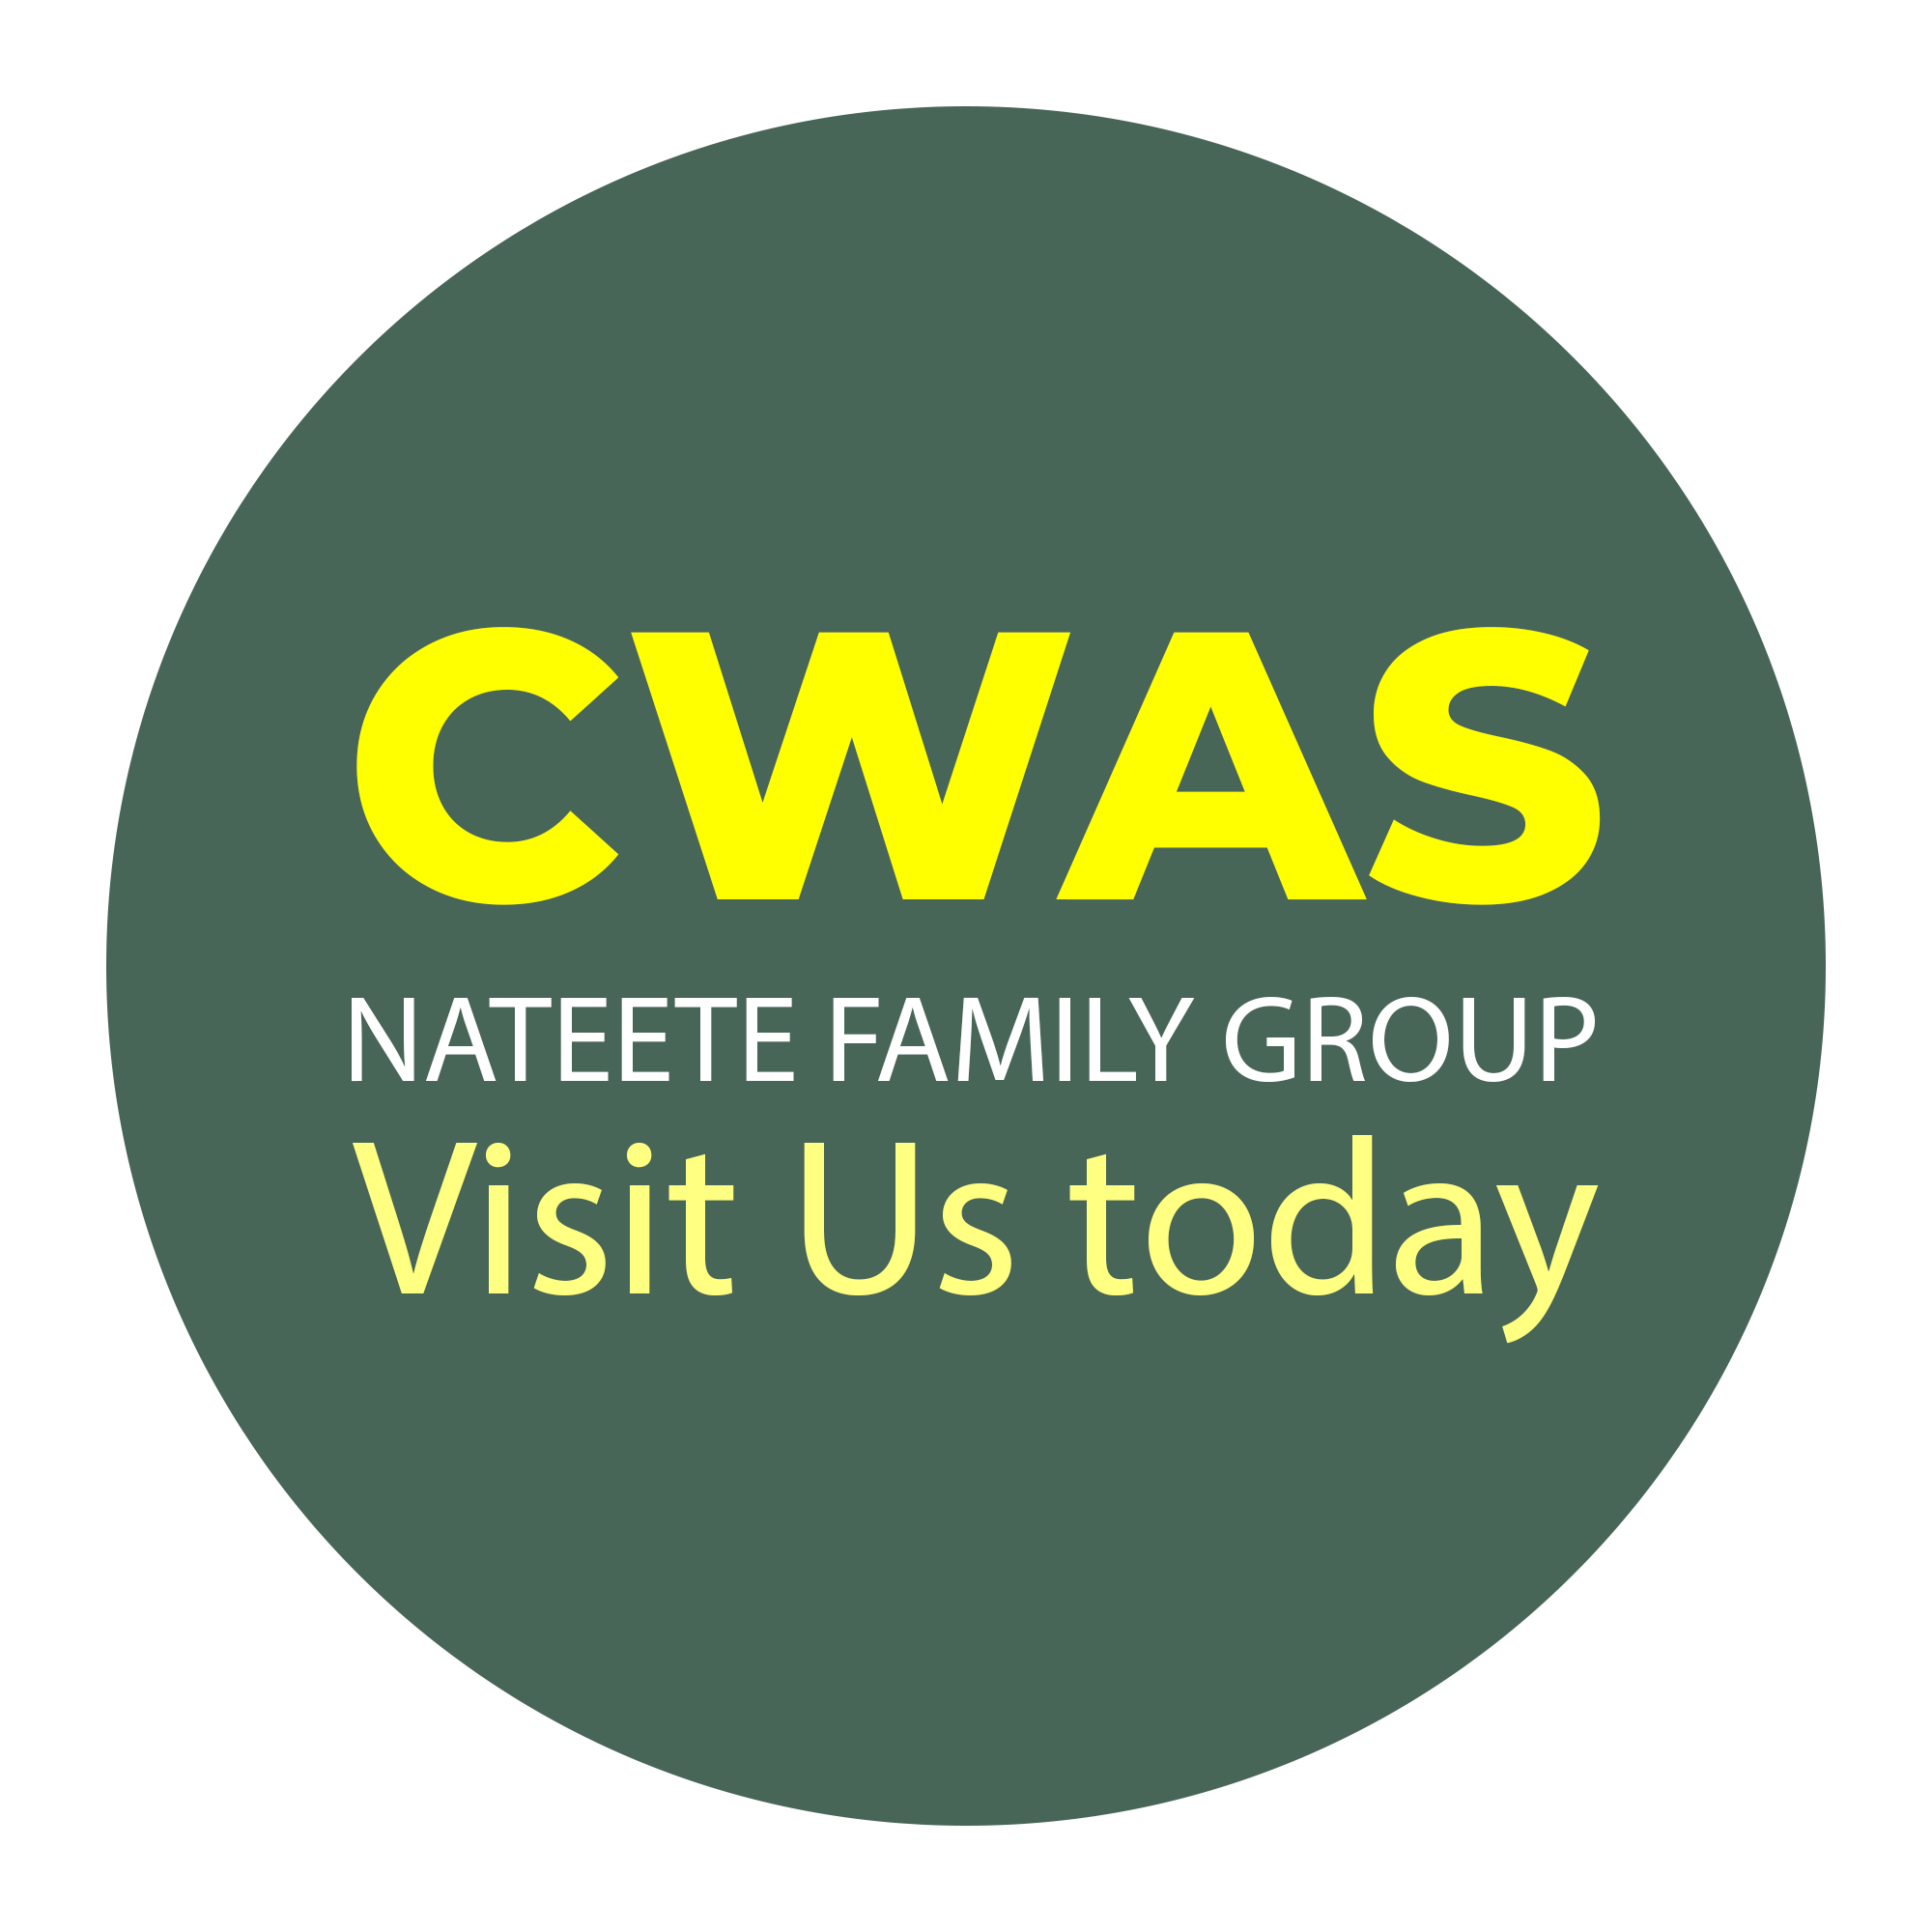 CWAS Nateete Family Group